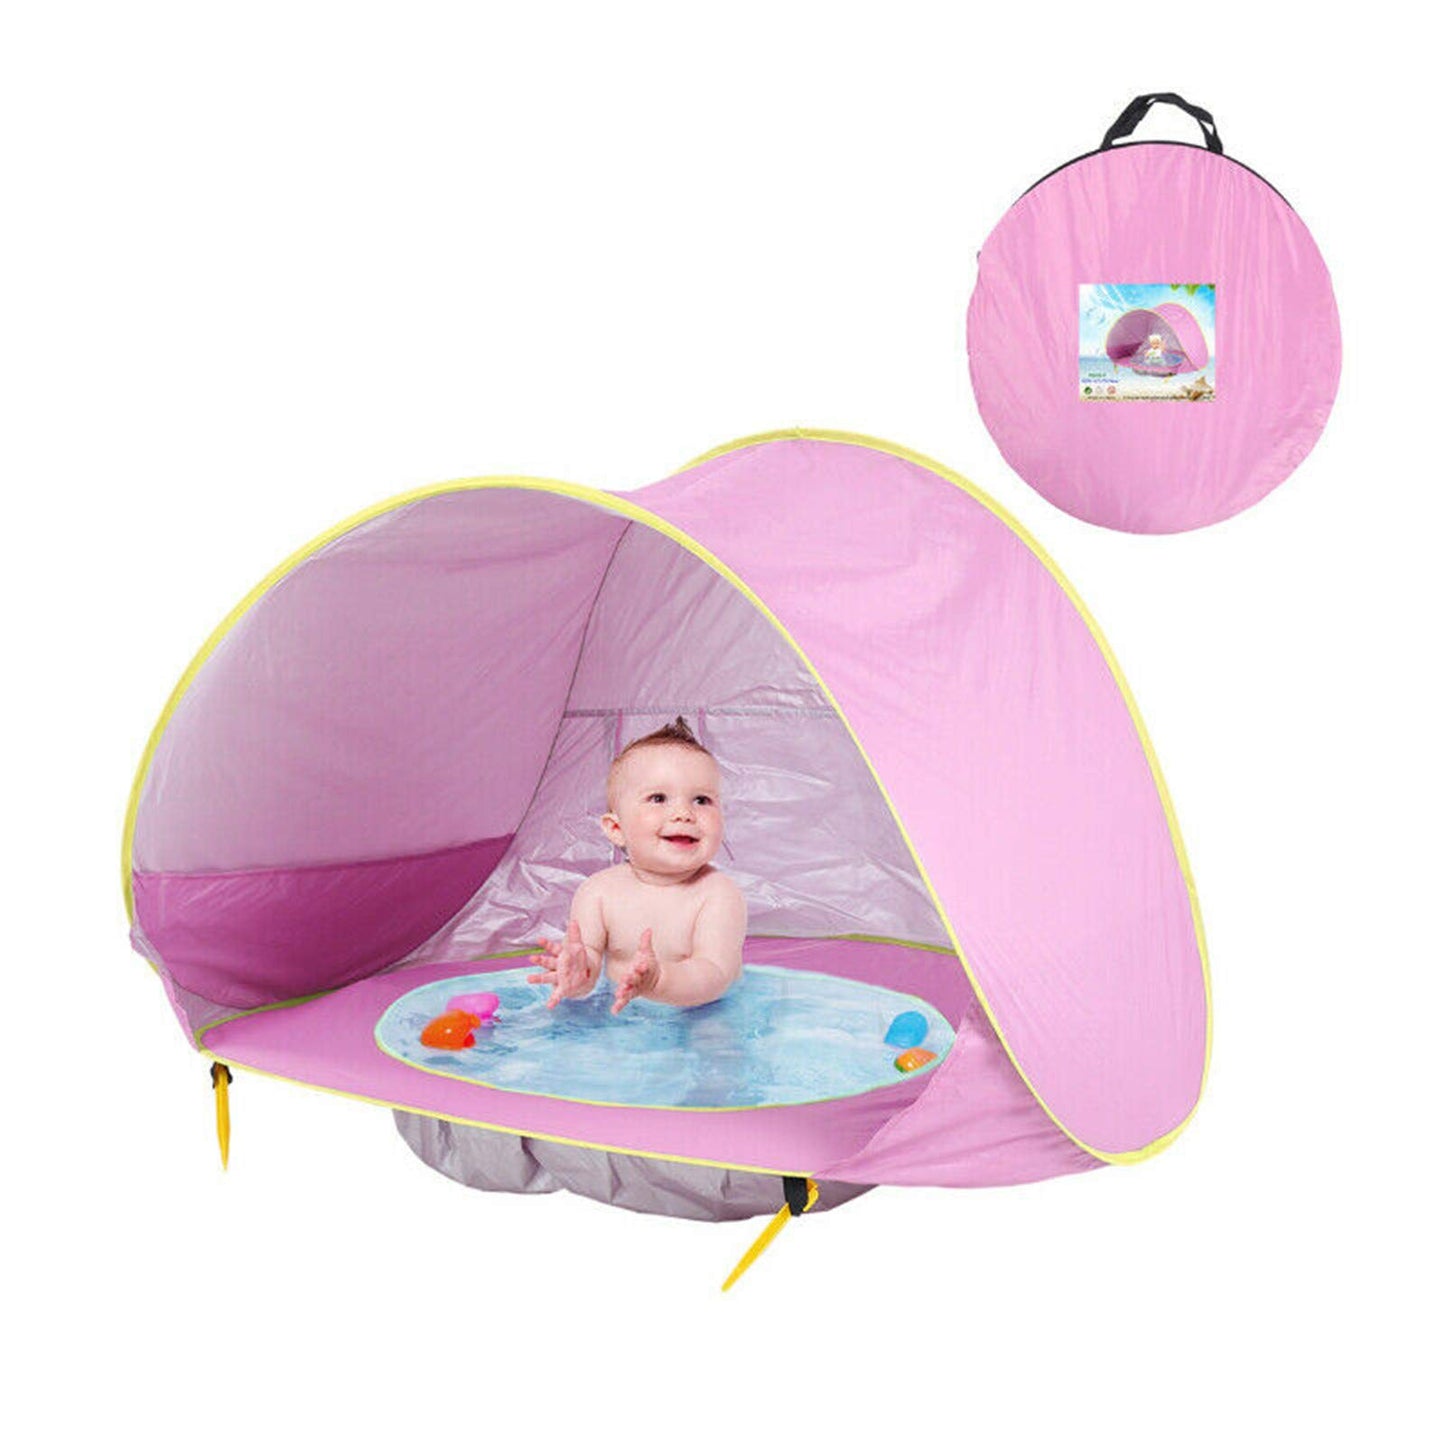 Ocean Pool Tent for Babies